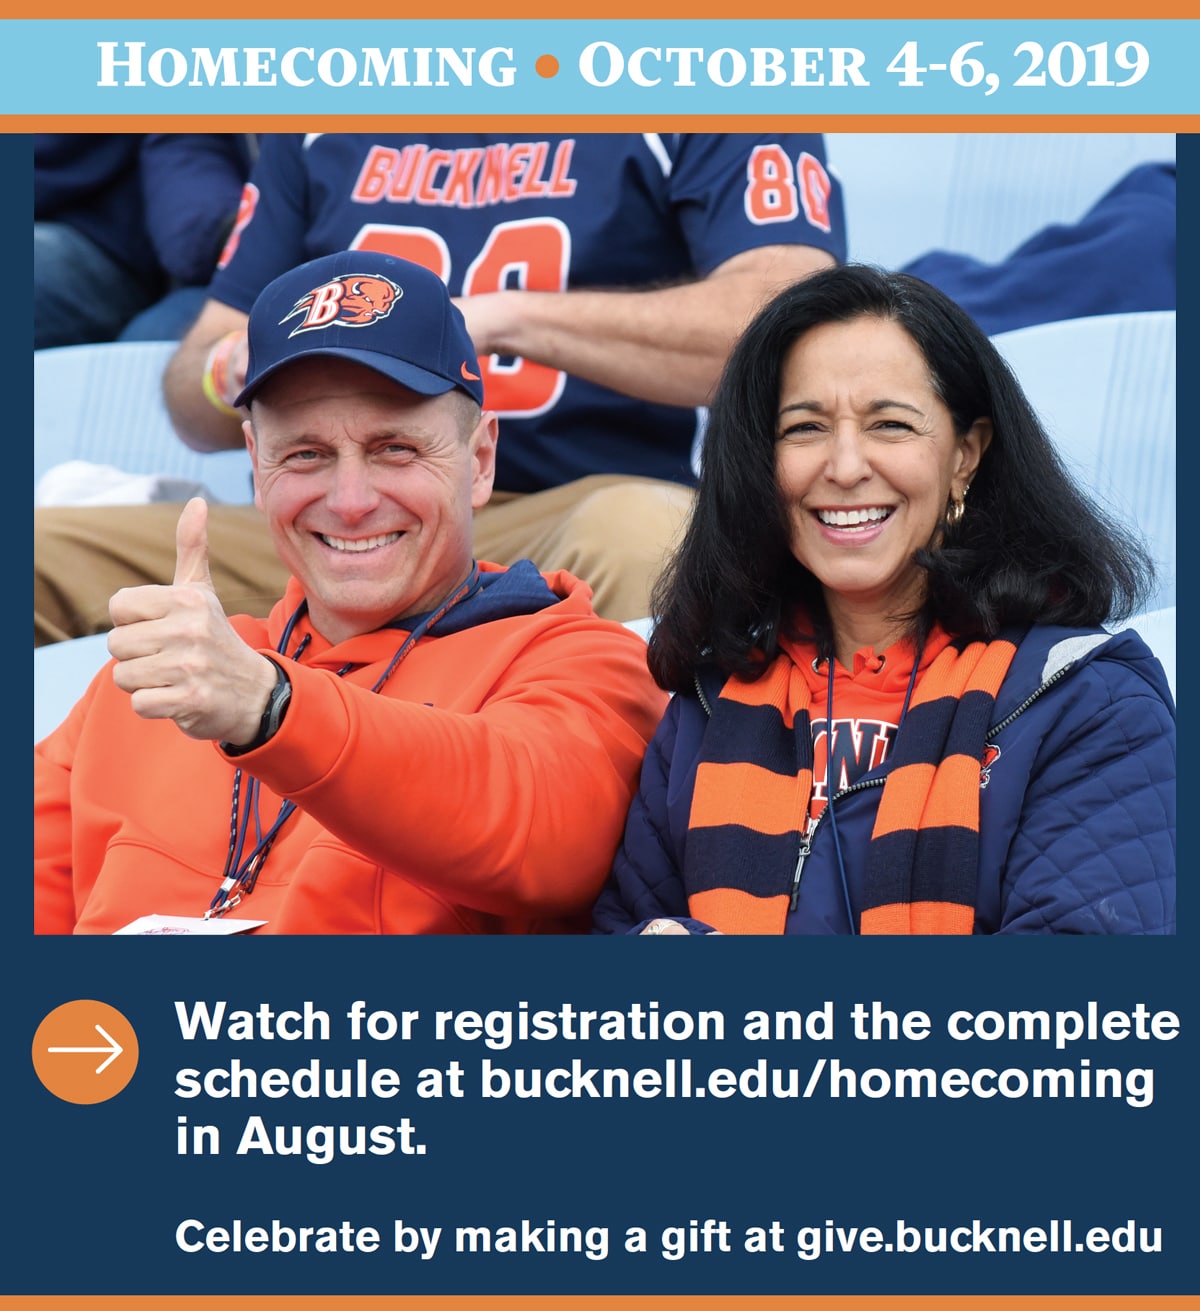 Homecoming 2019 Bucknell Advertisement